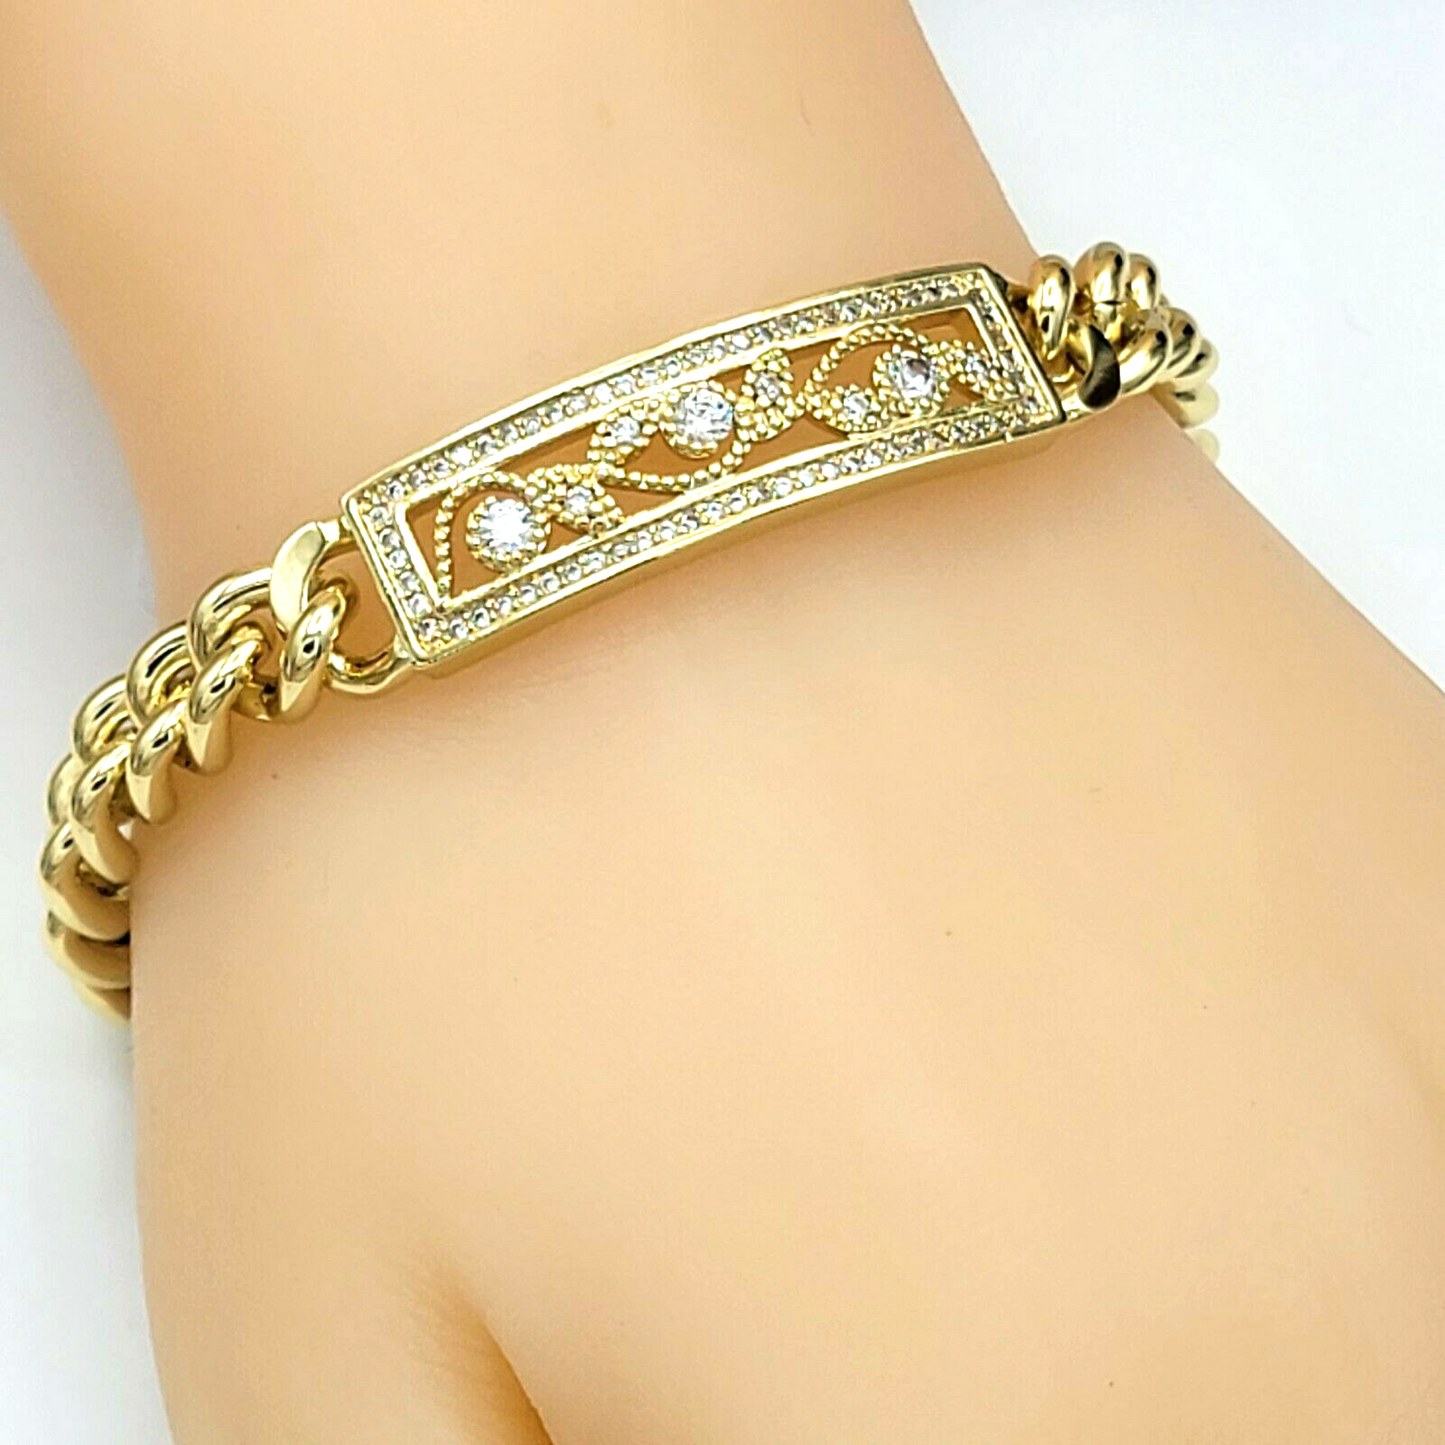 Bracelets - 14K Gold Plated. Vintage ID Plate CZ crystals Curb Link Chain Bracelet